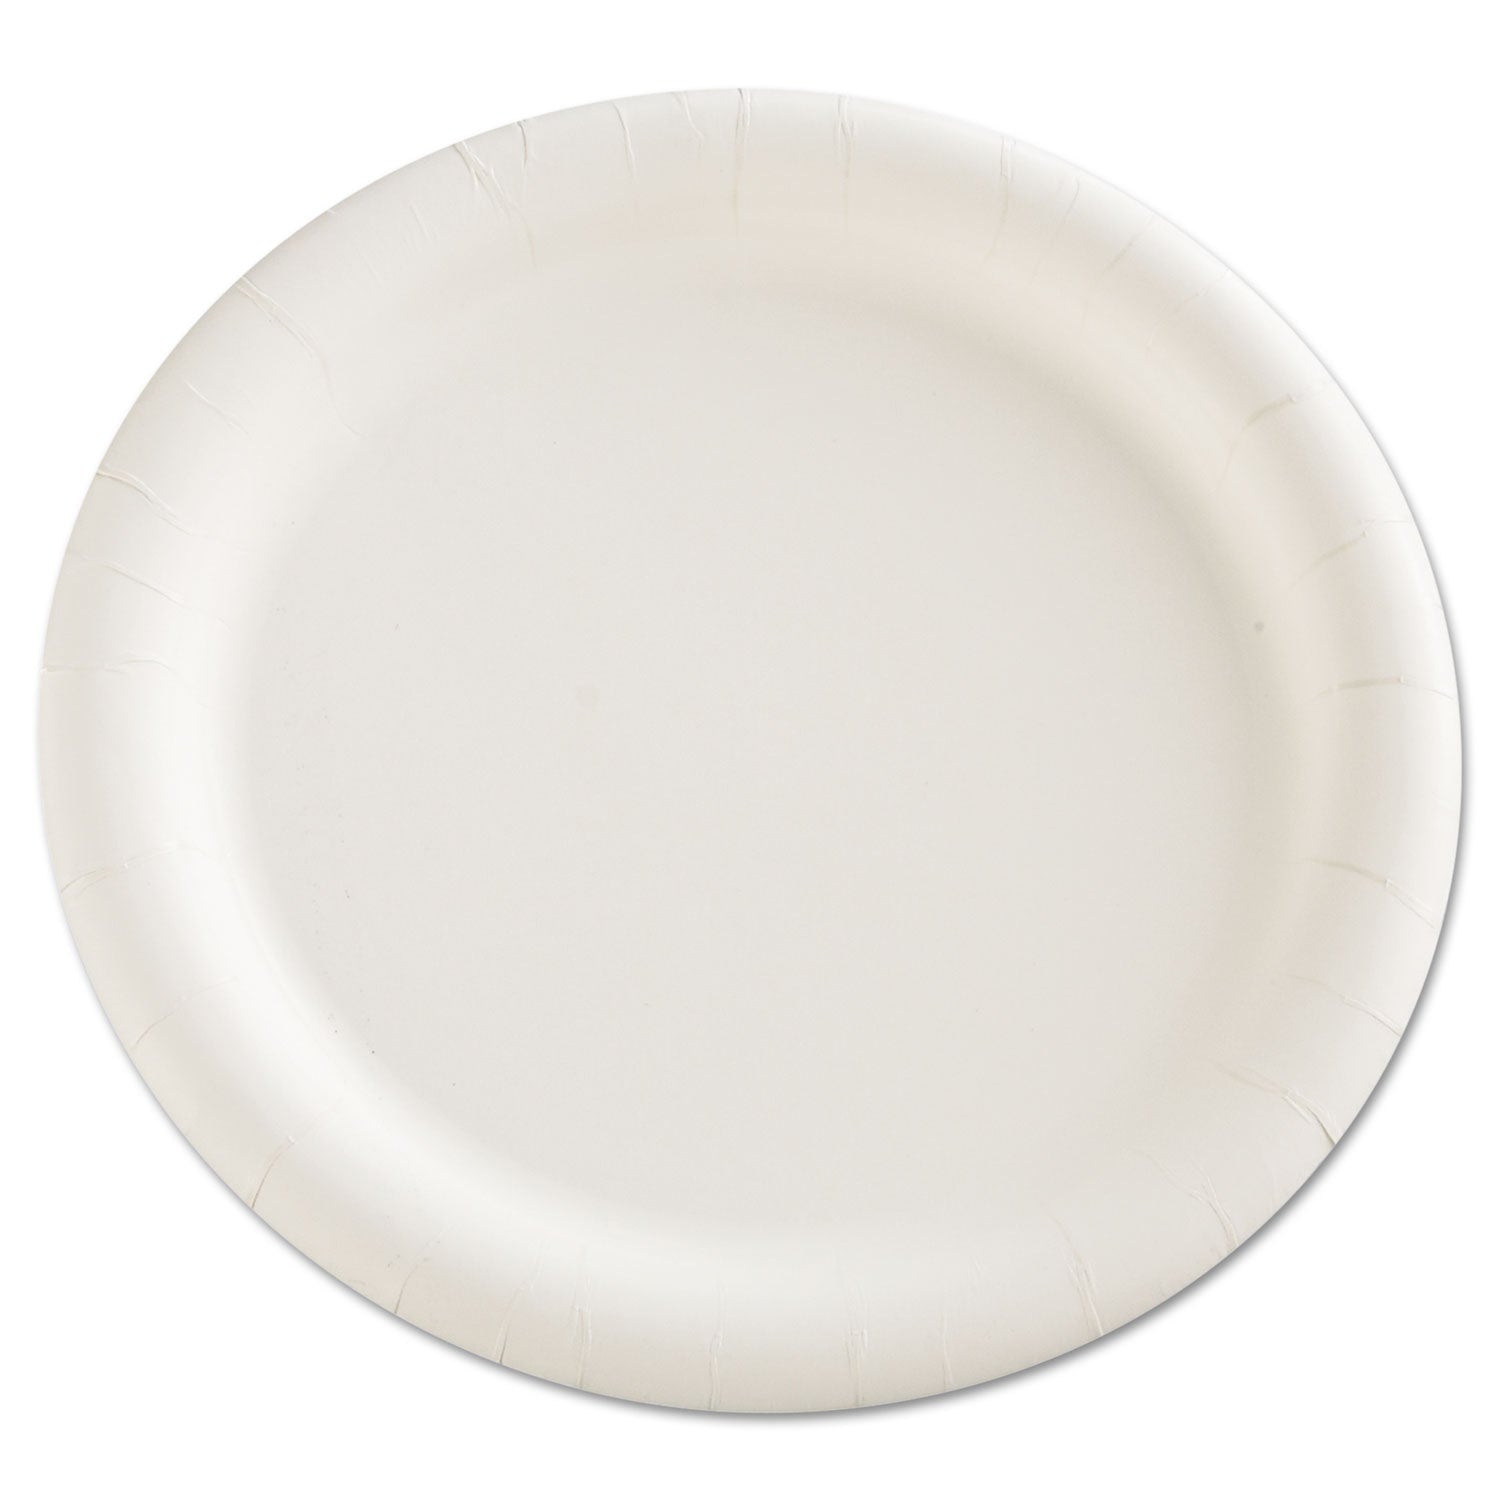 Premium Coated Paper Plates, 9" dia, White, 125/Pack, 4 Packs/Carton - 